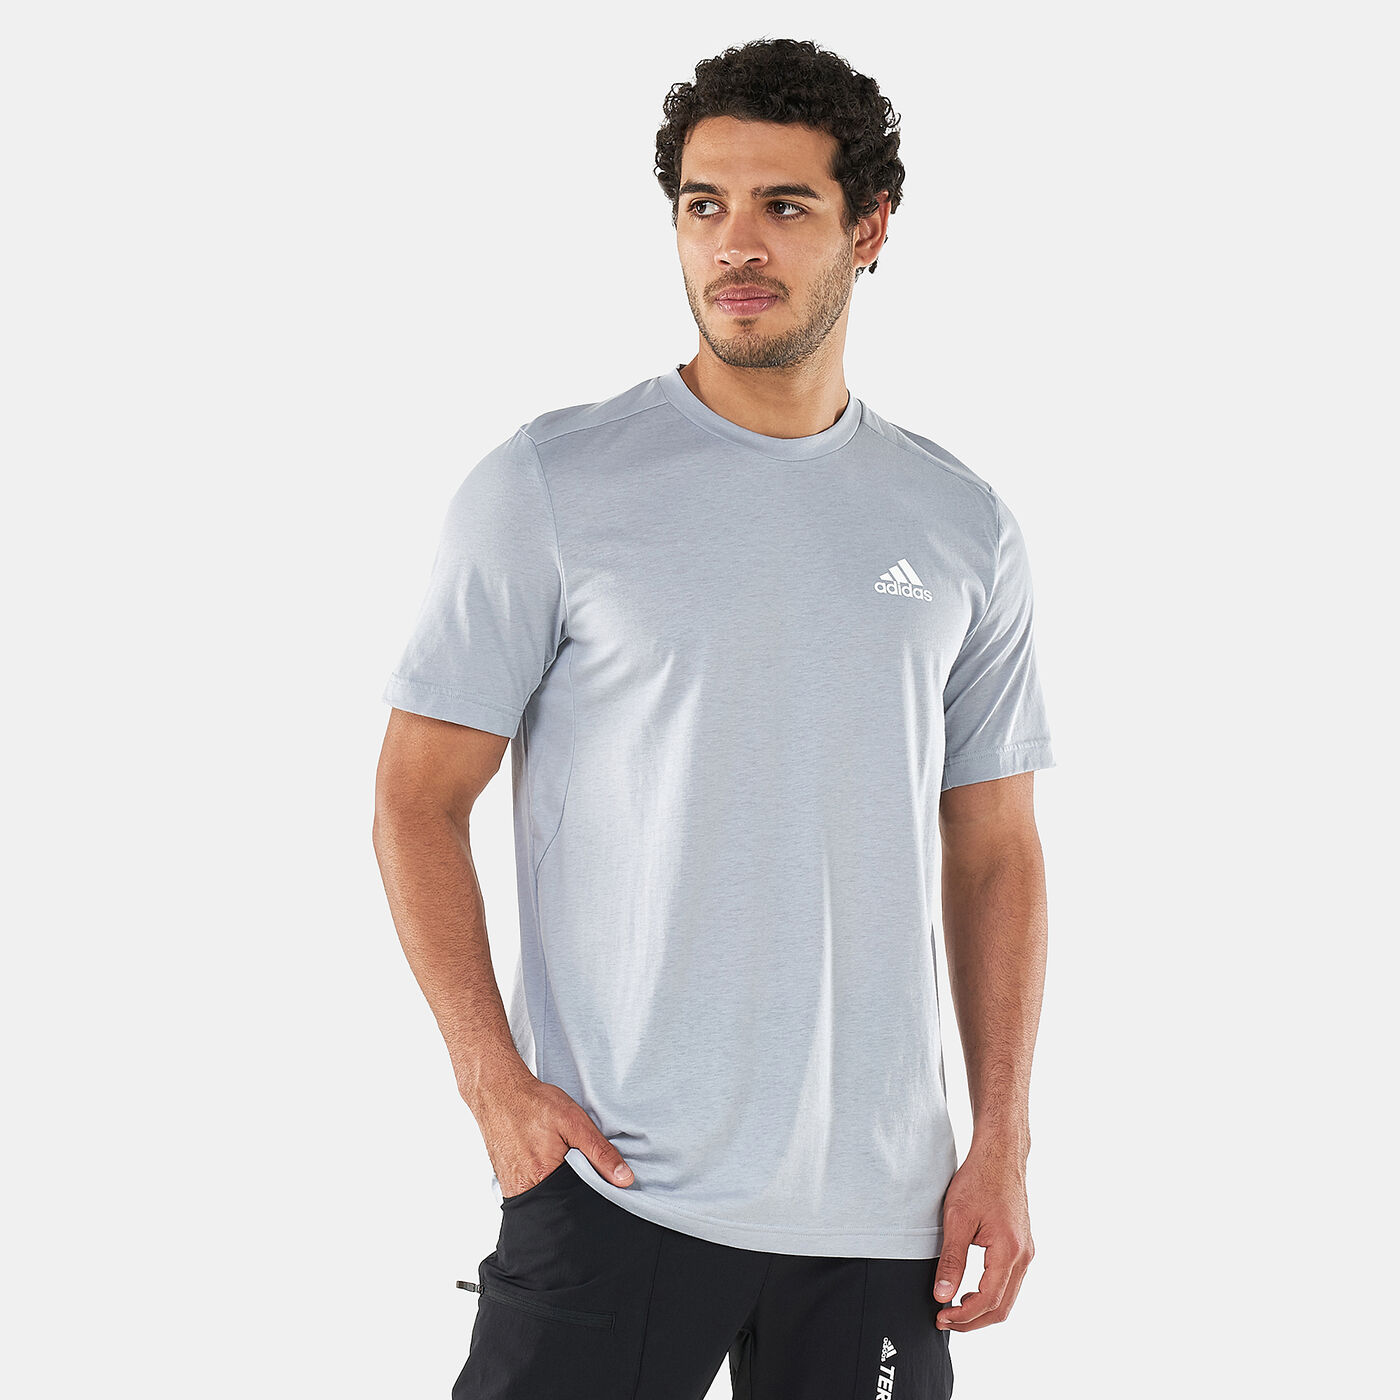 Men’s AEROREADY Designed To Move FeelReady Sport T-Shirt